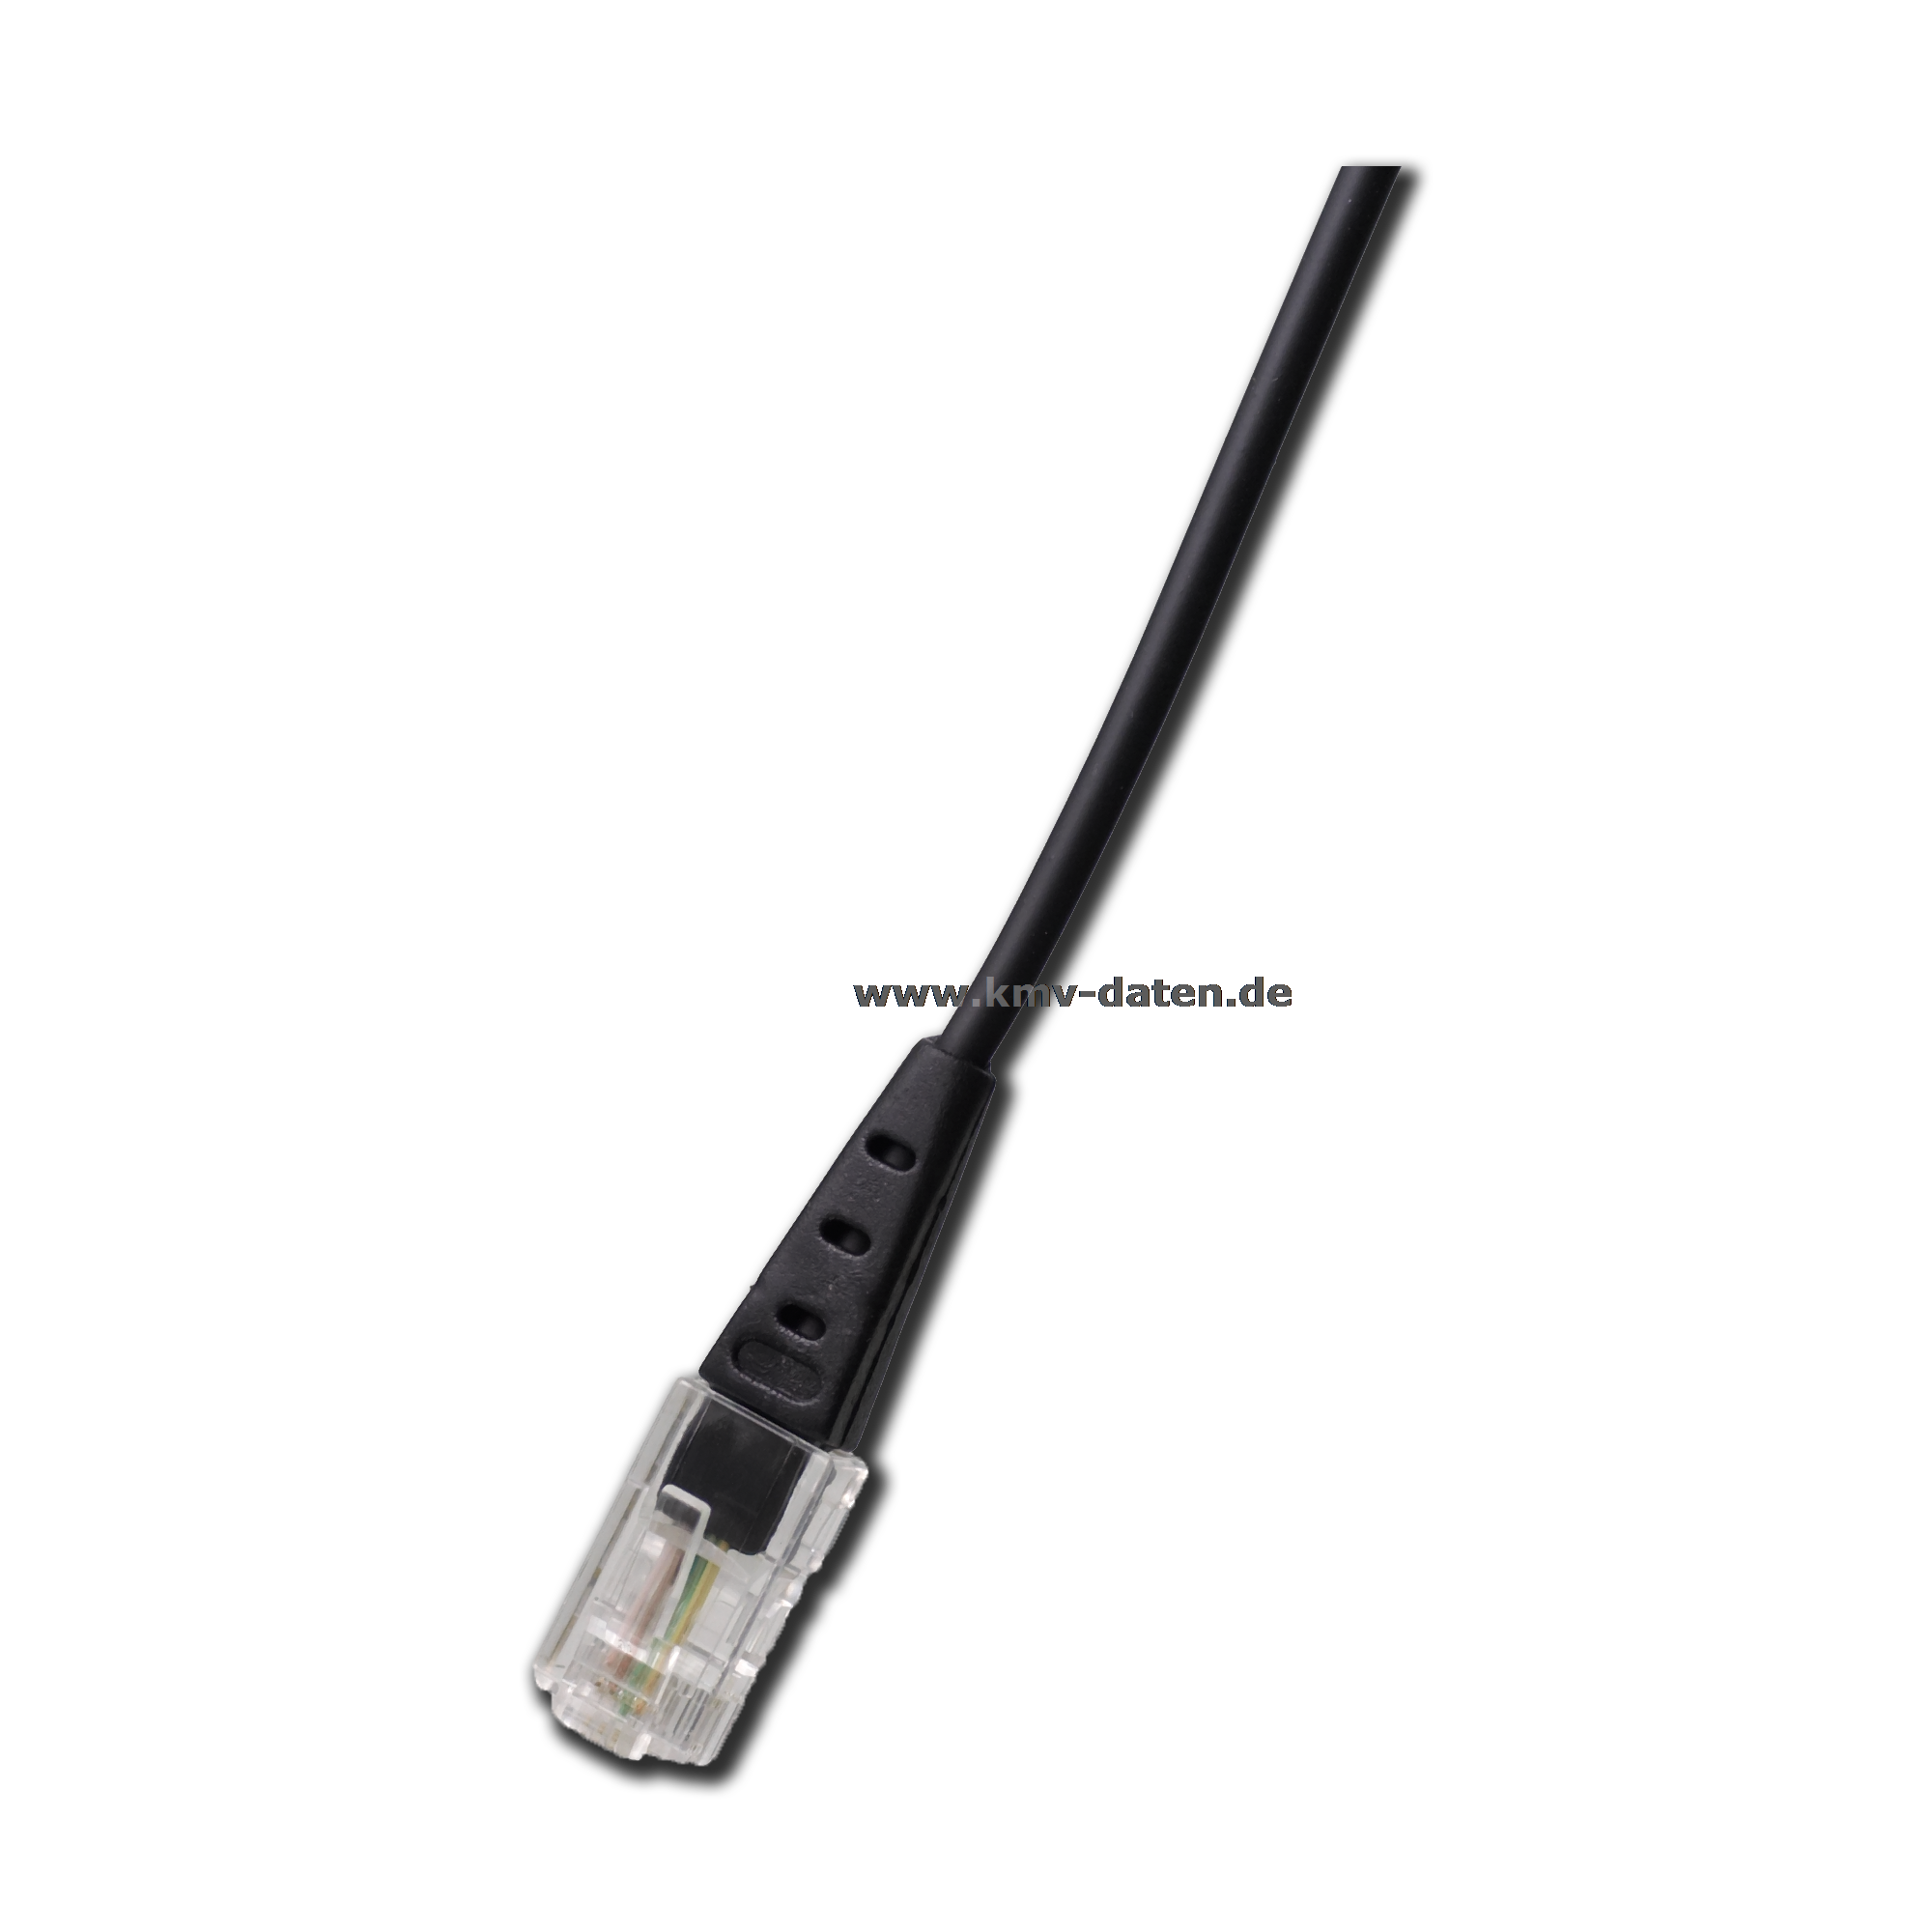 ISDN Kabel Länge:1,0m
RJ 45 Hellbraun<> RJ 45 Hellbraun
mit angespritzter Knickschutztülle